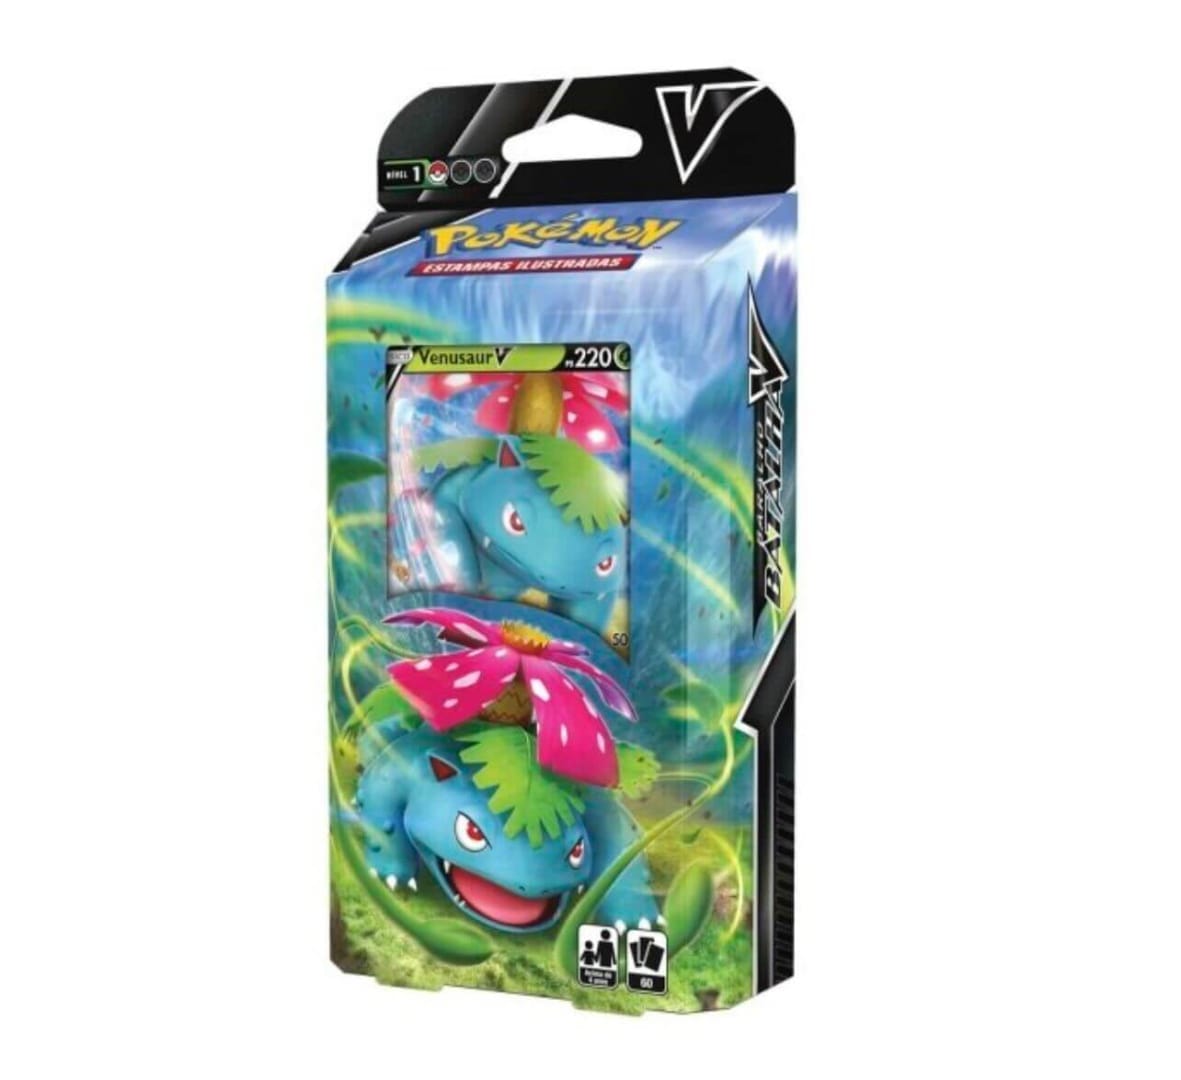 Venosaur Pokemon TCG deck and deck box